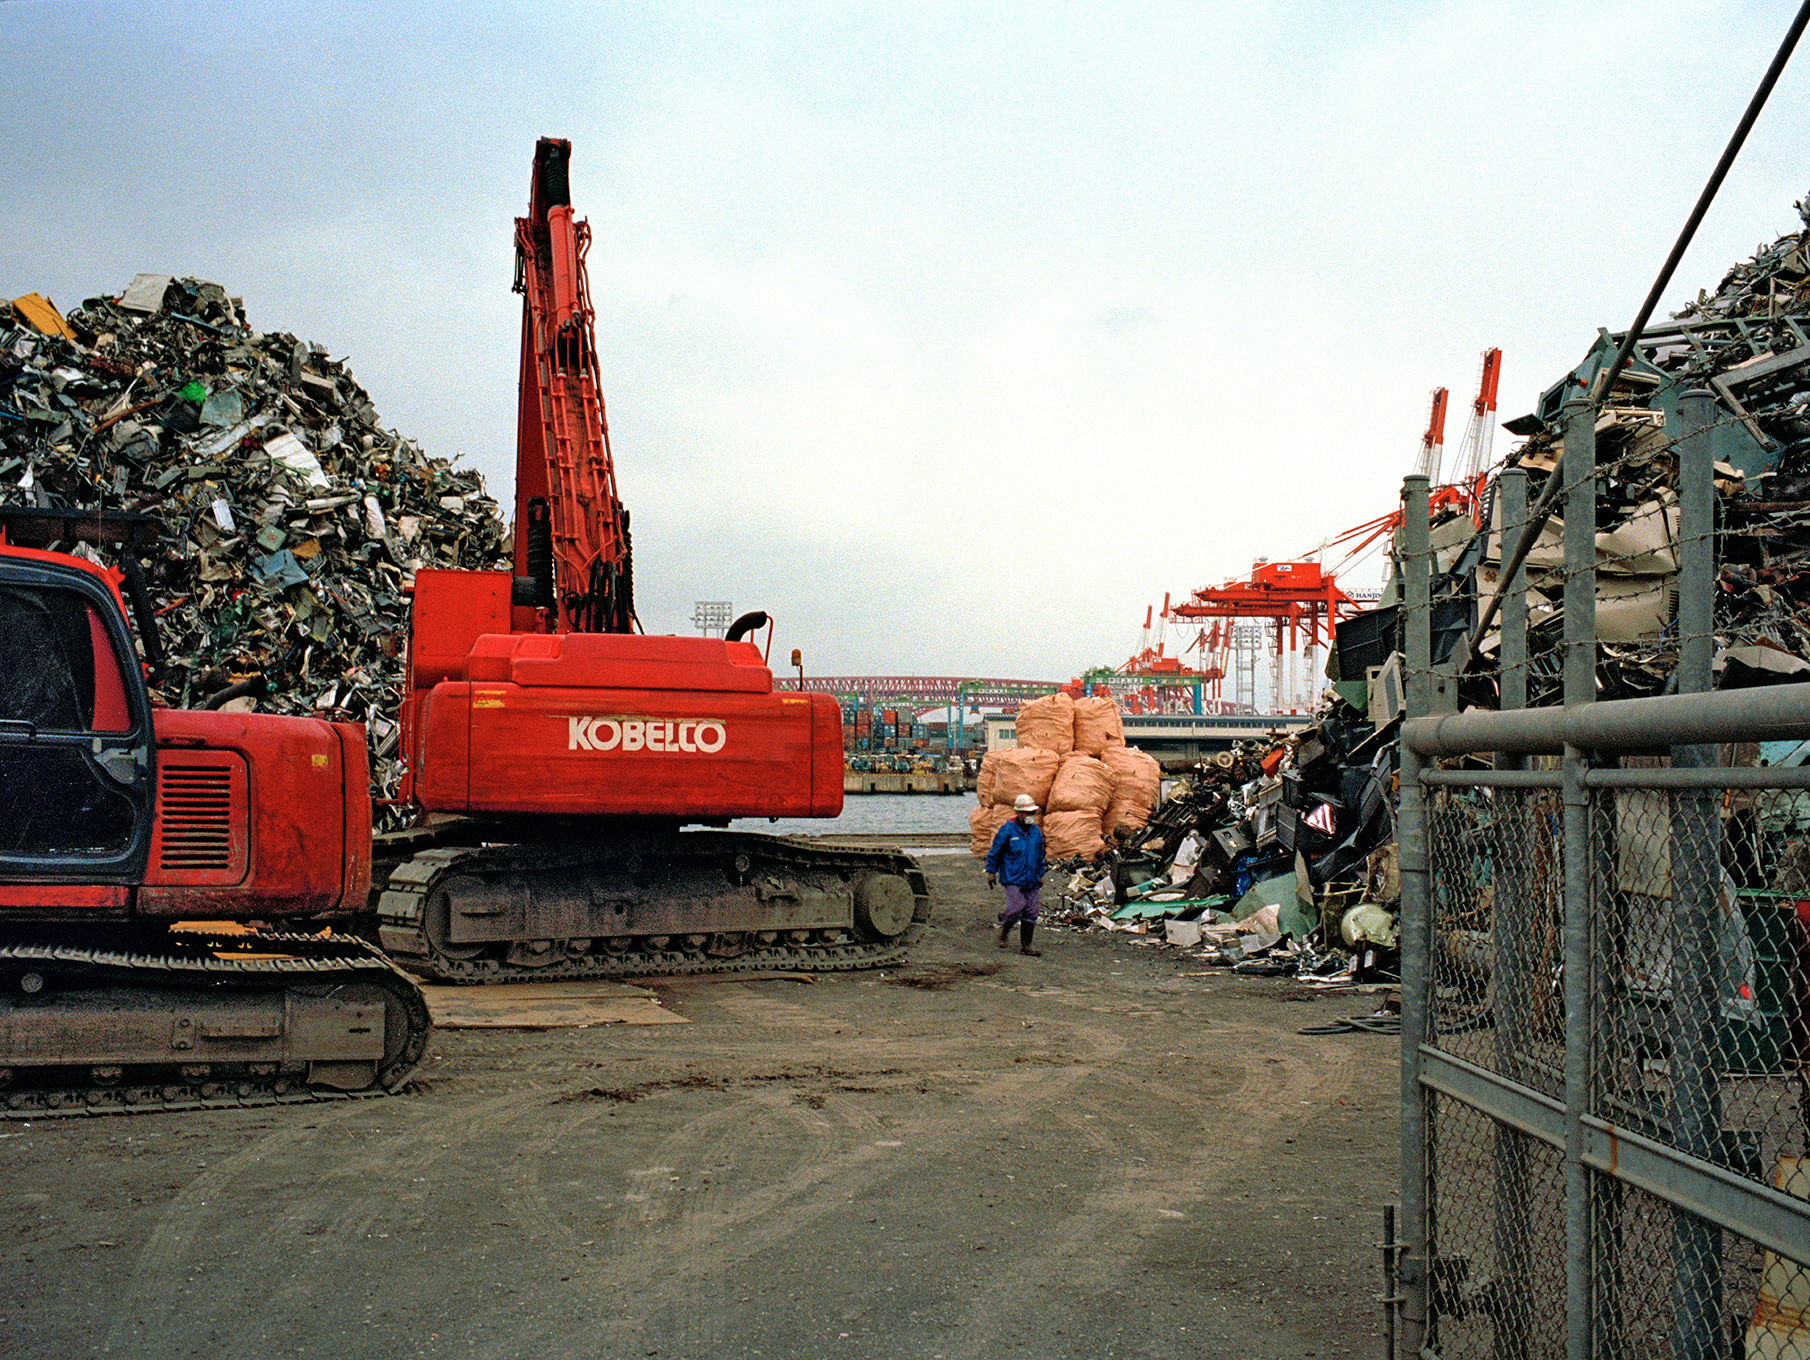   Metal recycling area,  Tsurumachi, 2010  